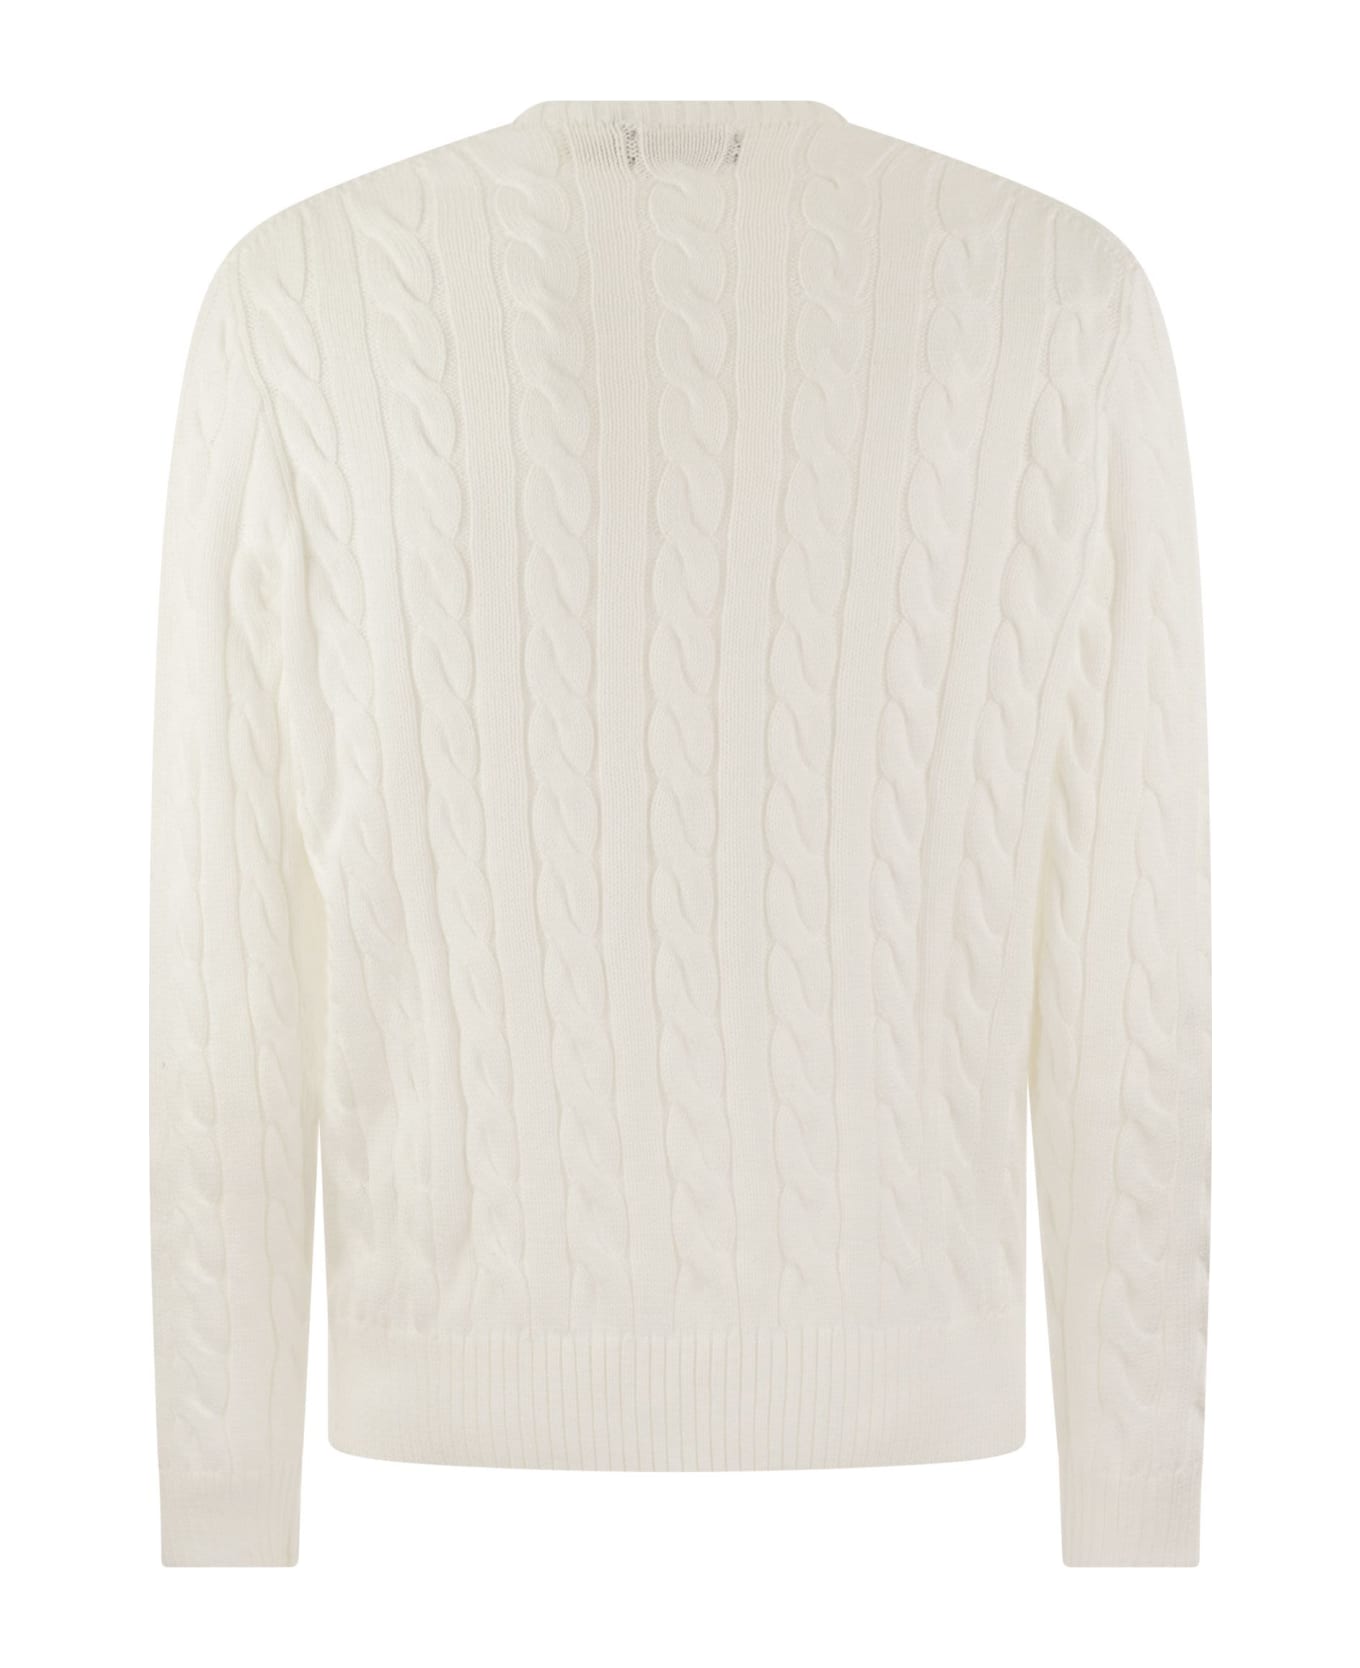 Polo Ralph Lauren Plaited Cotton Jersey - White